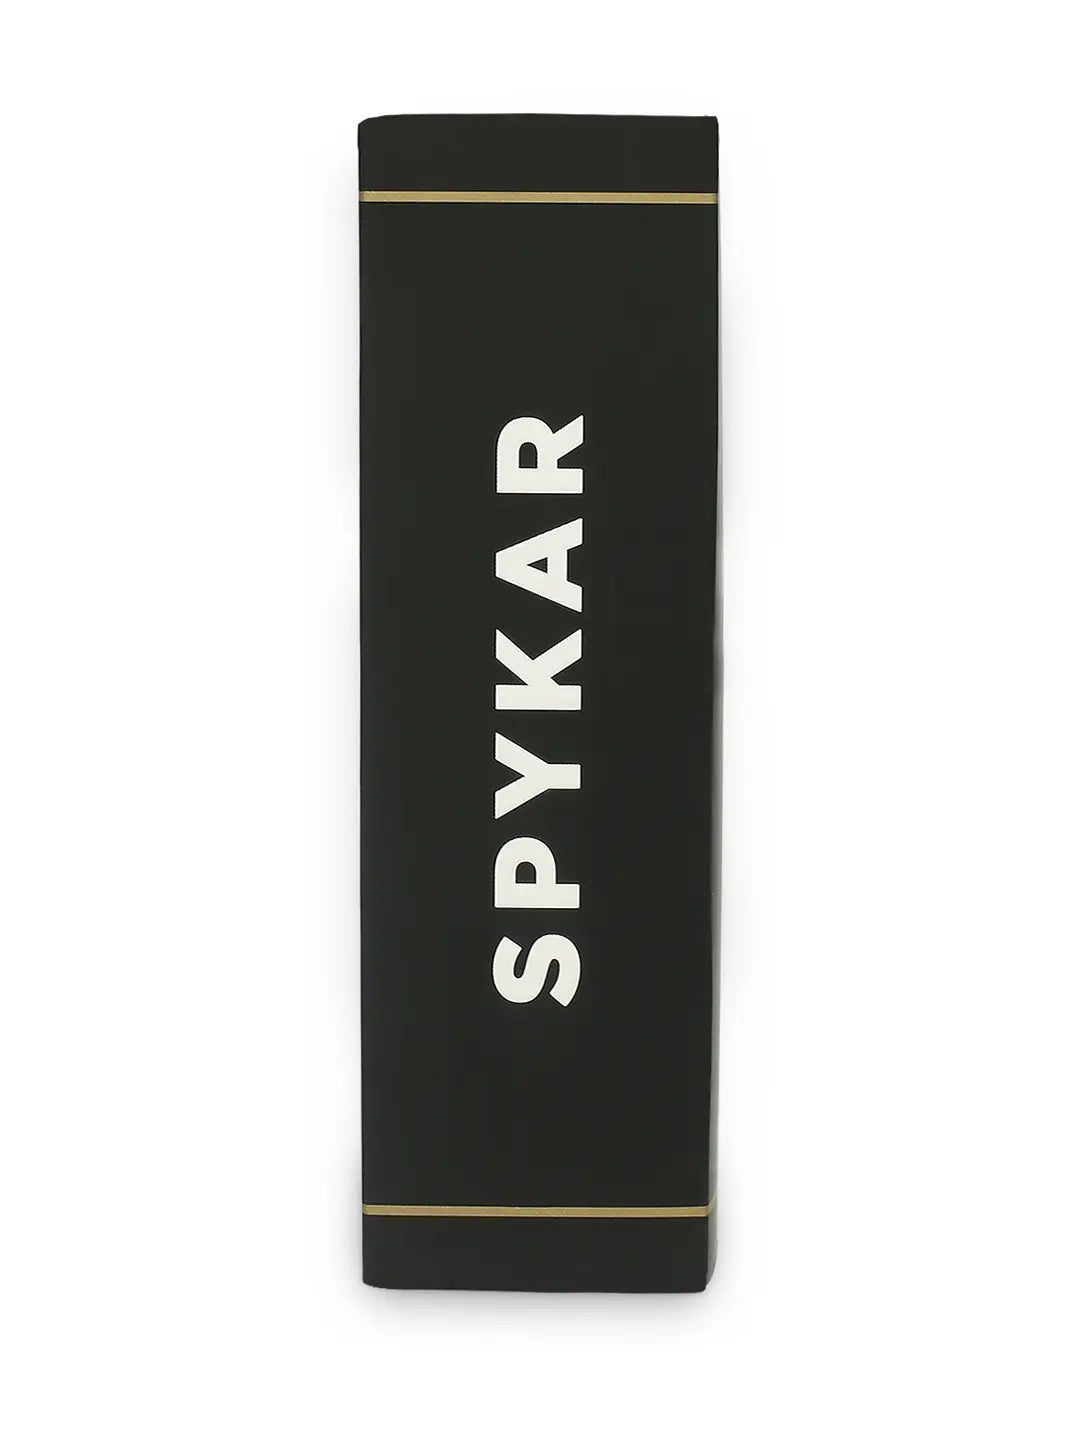 Spykar Black Onyx & Forever All Day Long Deo & Perfume